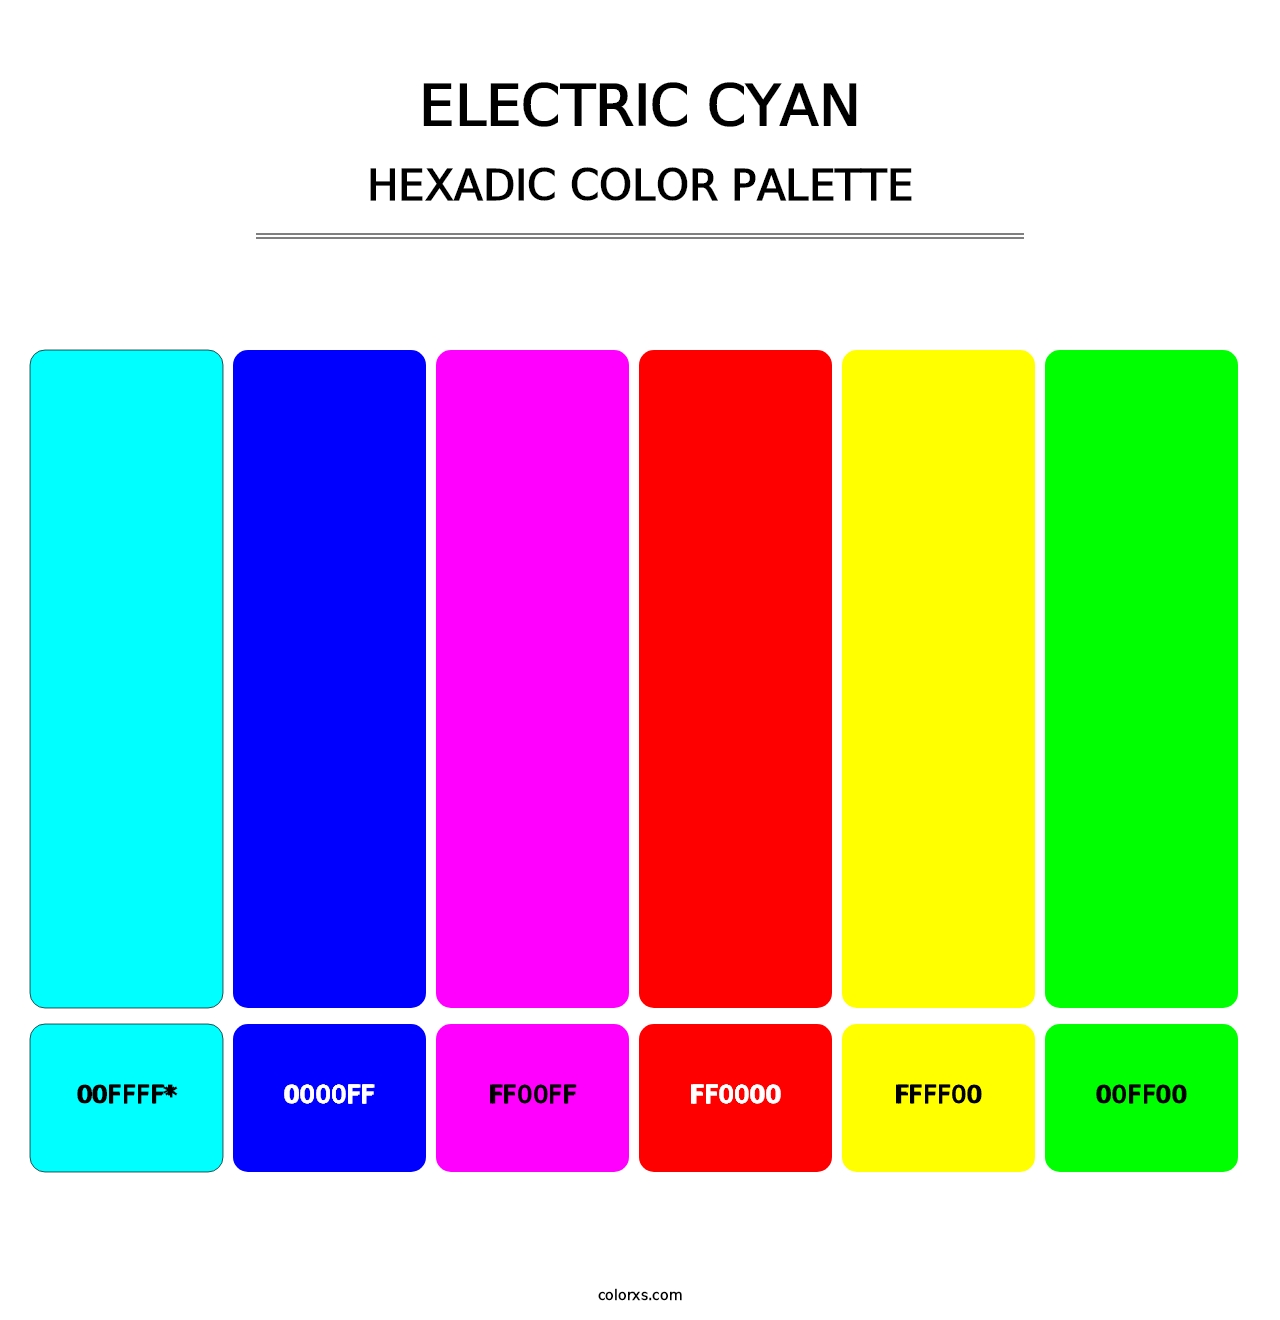 Electric Cyan - Hexadic Color Palette